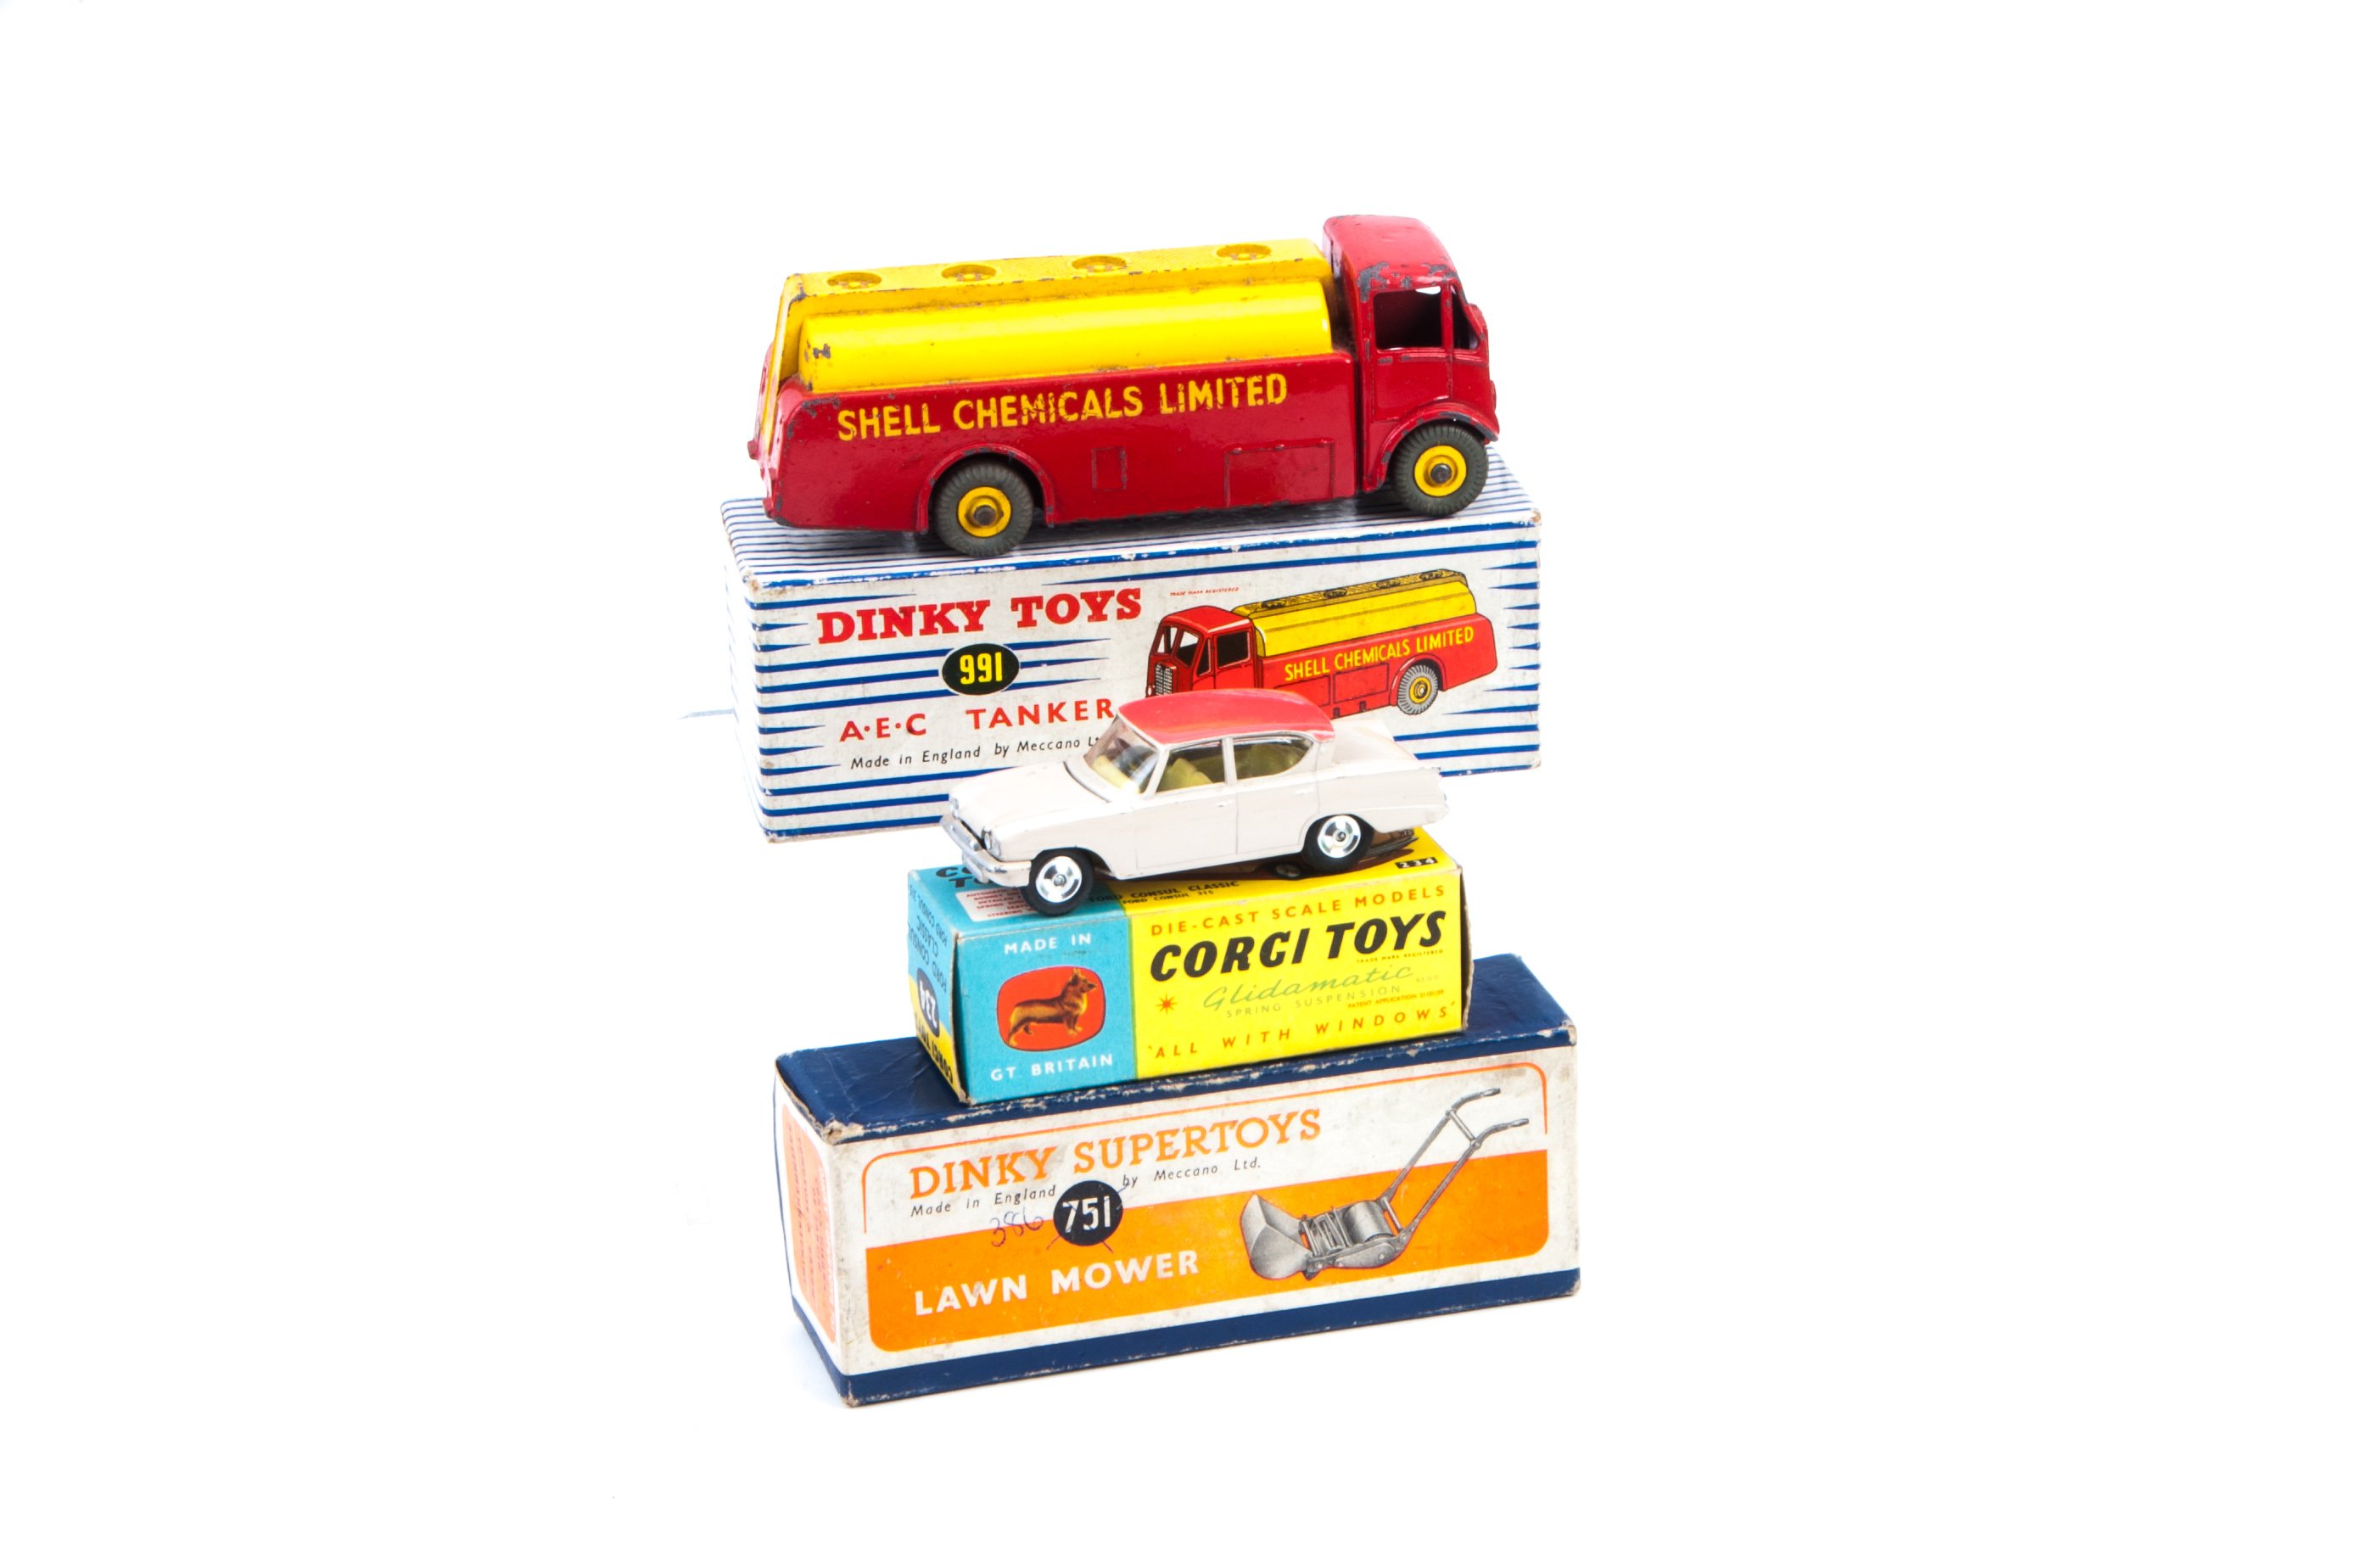 Dinky & Corgi Toys, Dinky 991 AEC Tanker, 751 Lawn Mower, Corgi 234 Ford Consul Classic, in original